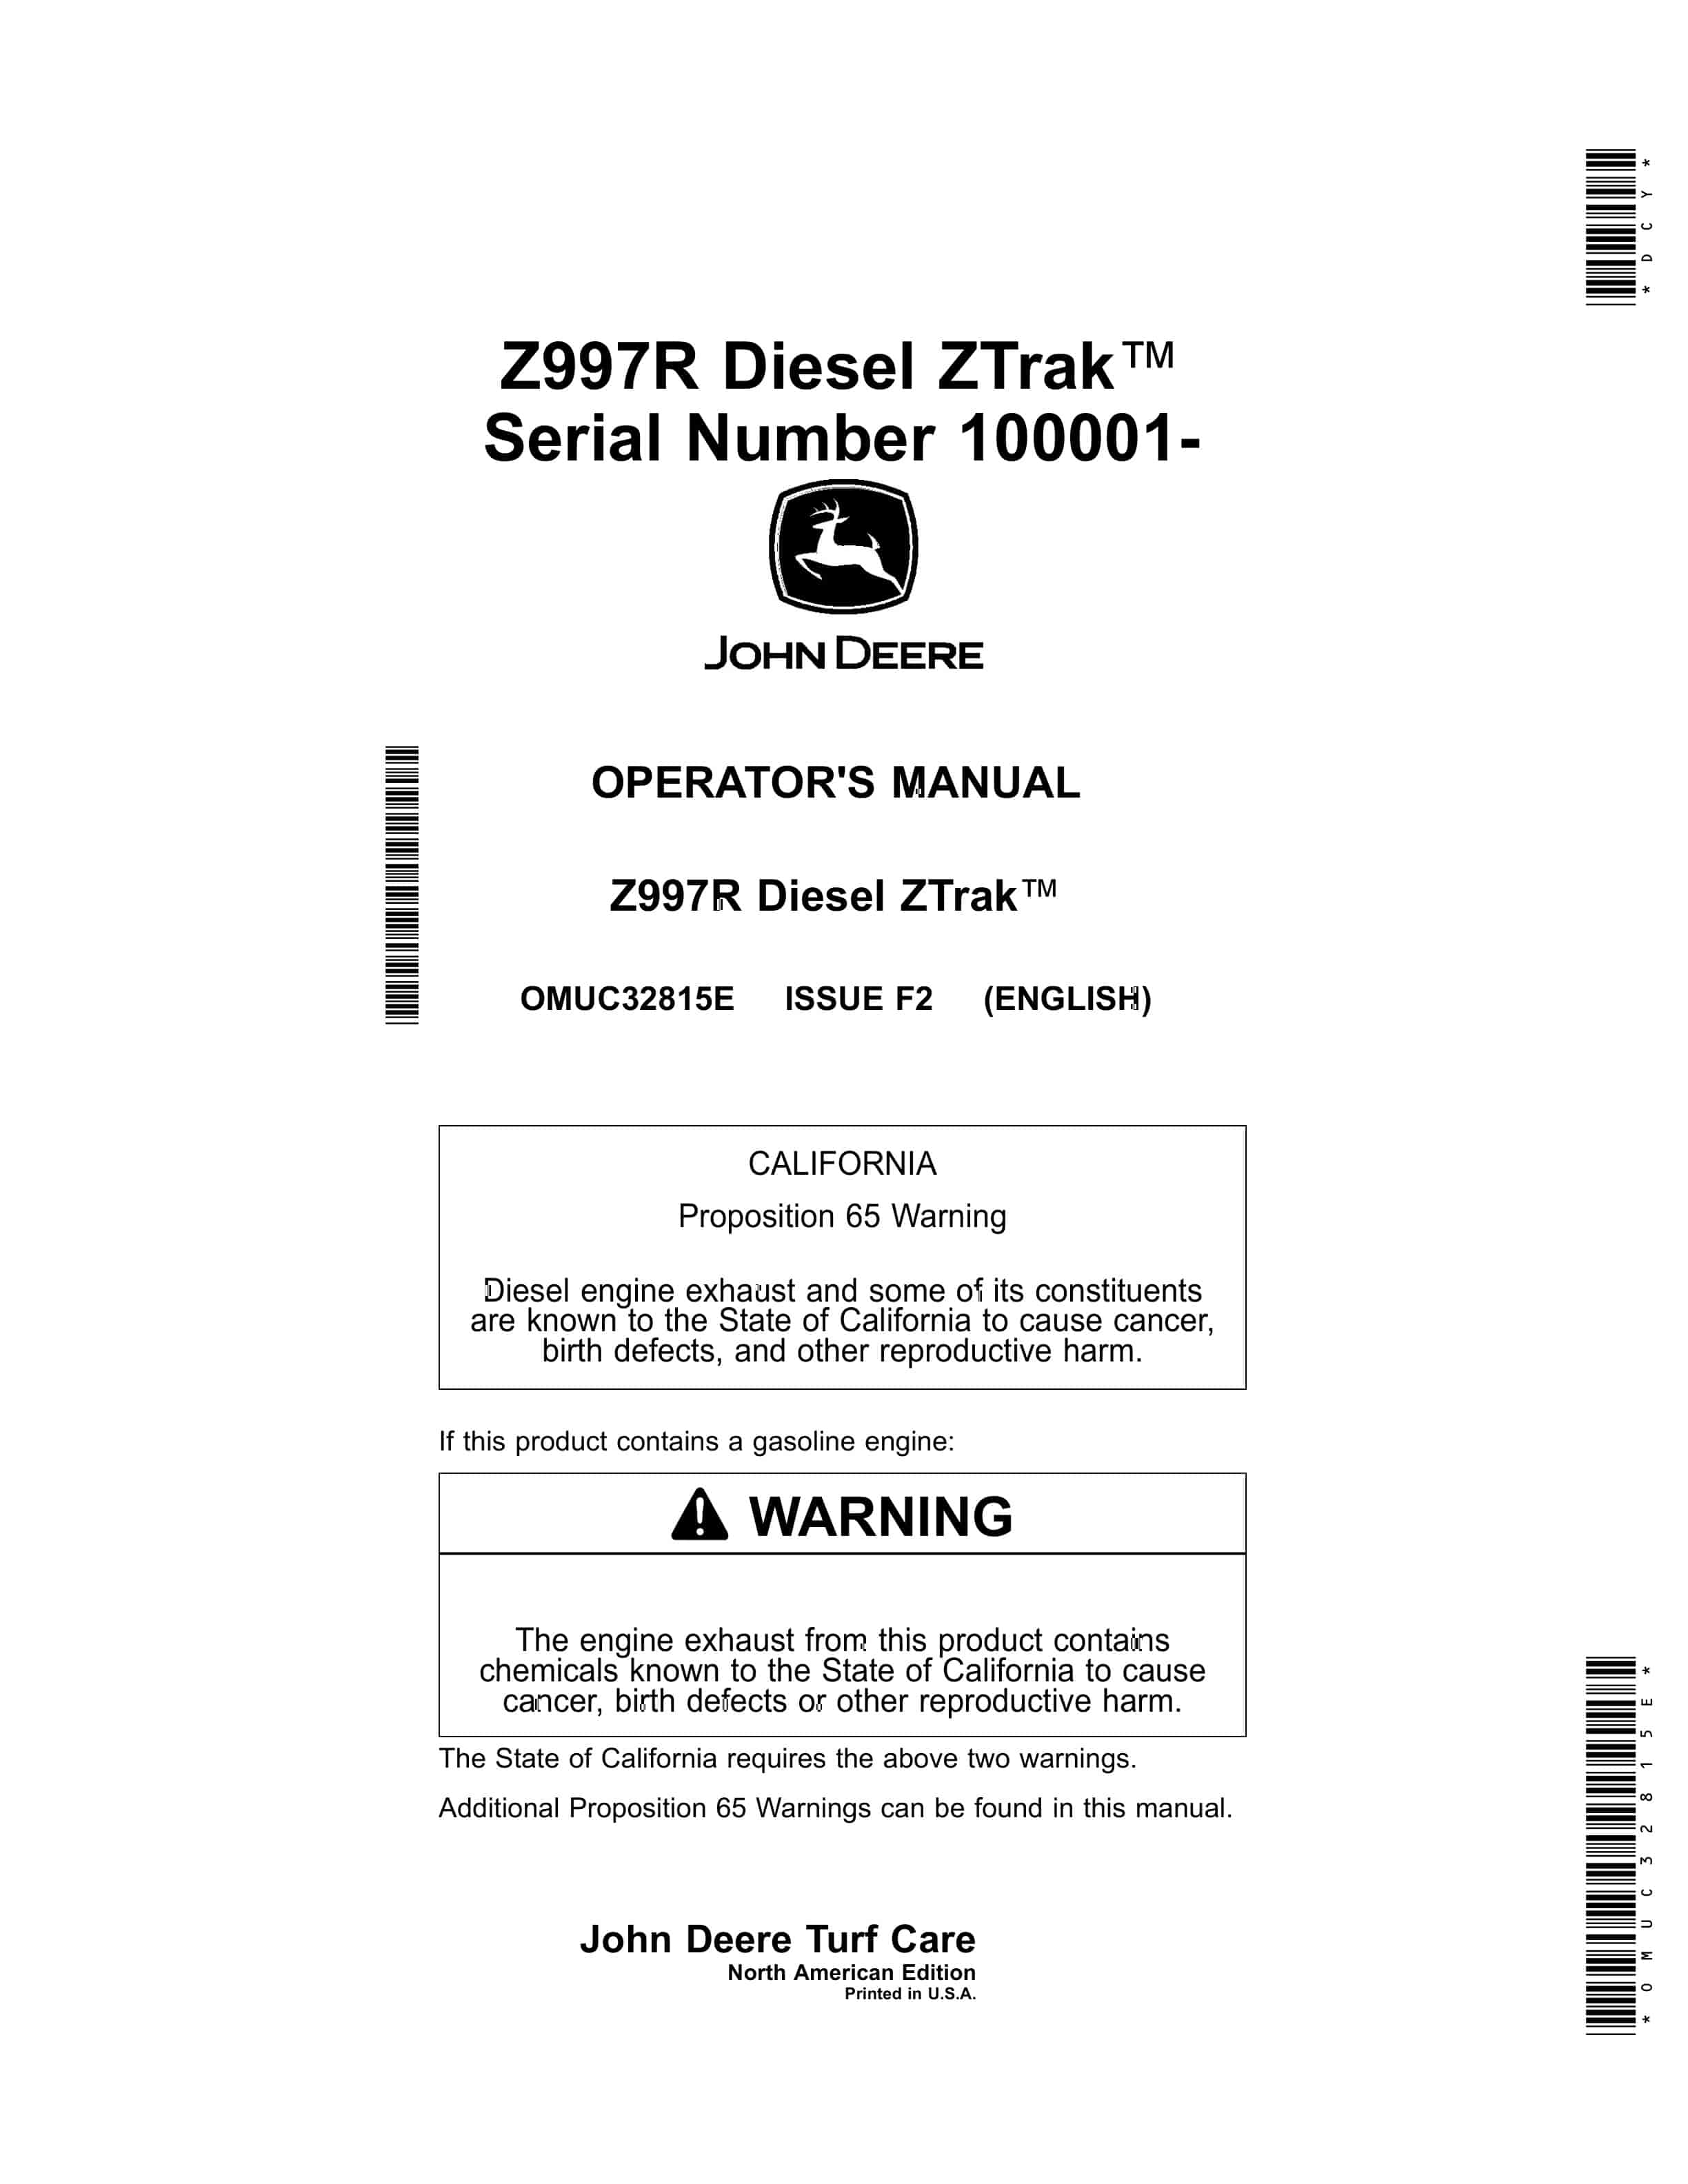 John Deere Z997R Diesel ZTrak Serial Number 100001 Operator Manual OMUC32815E 1